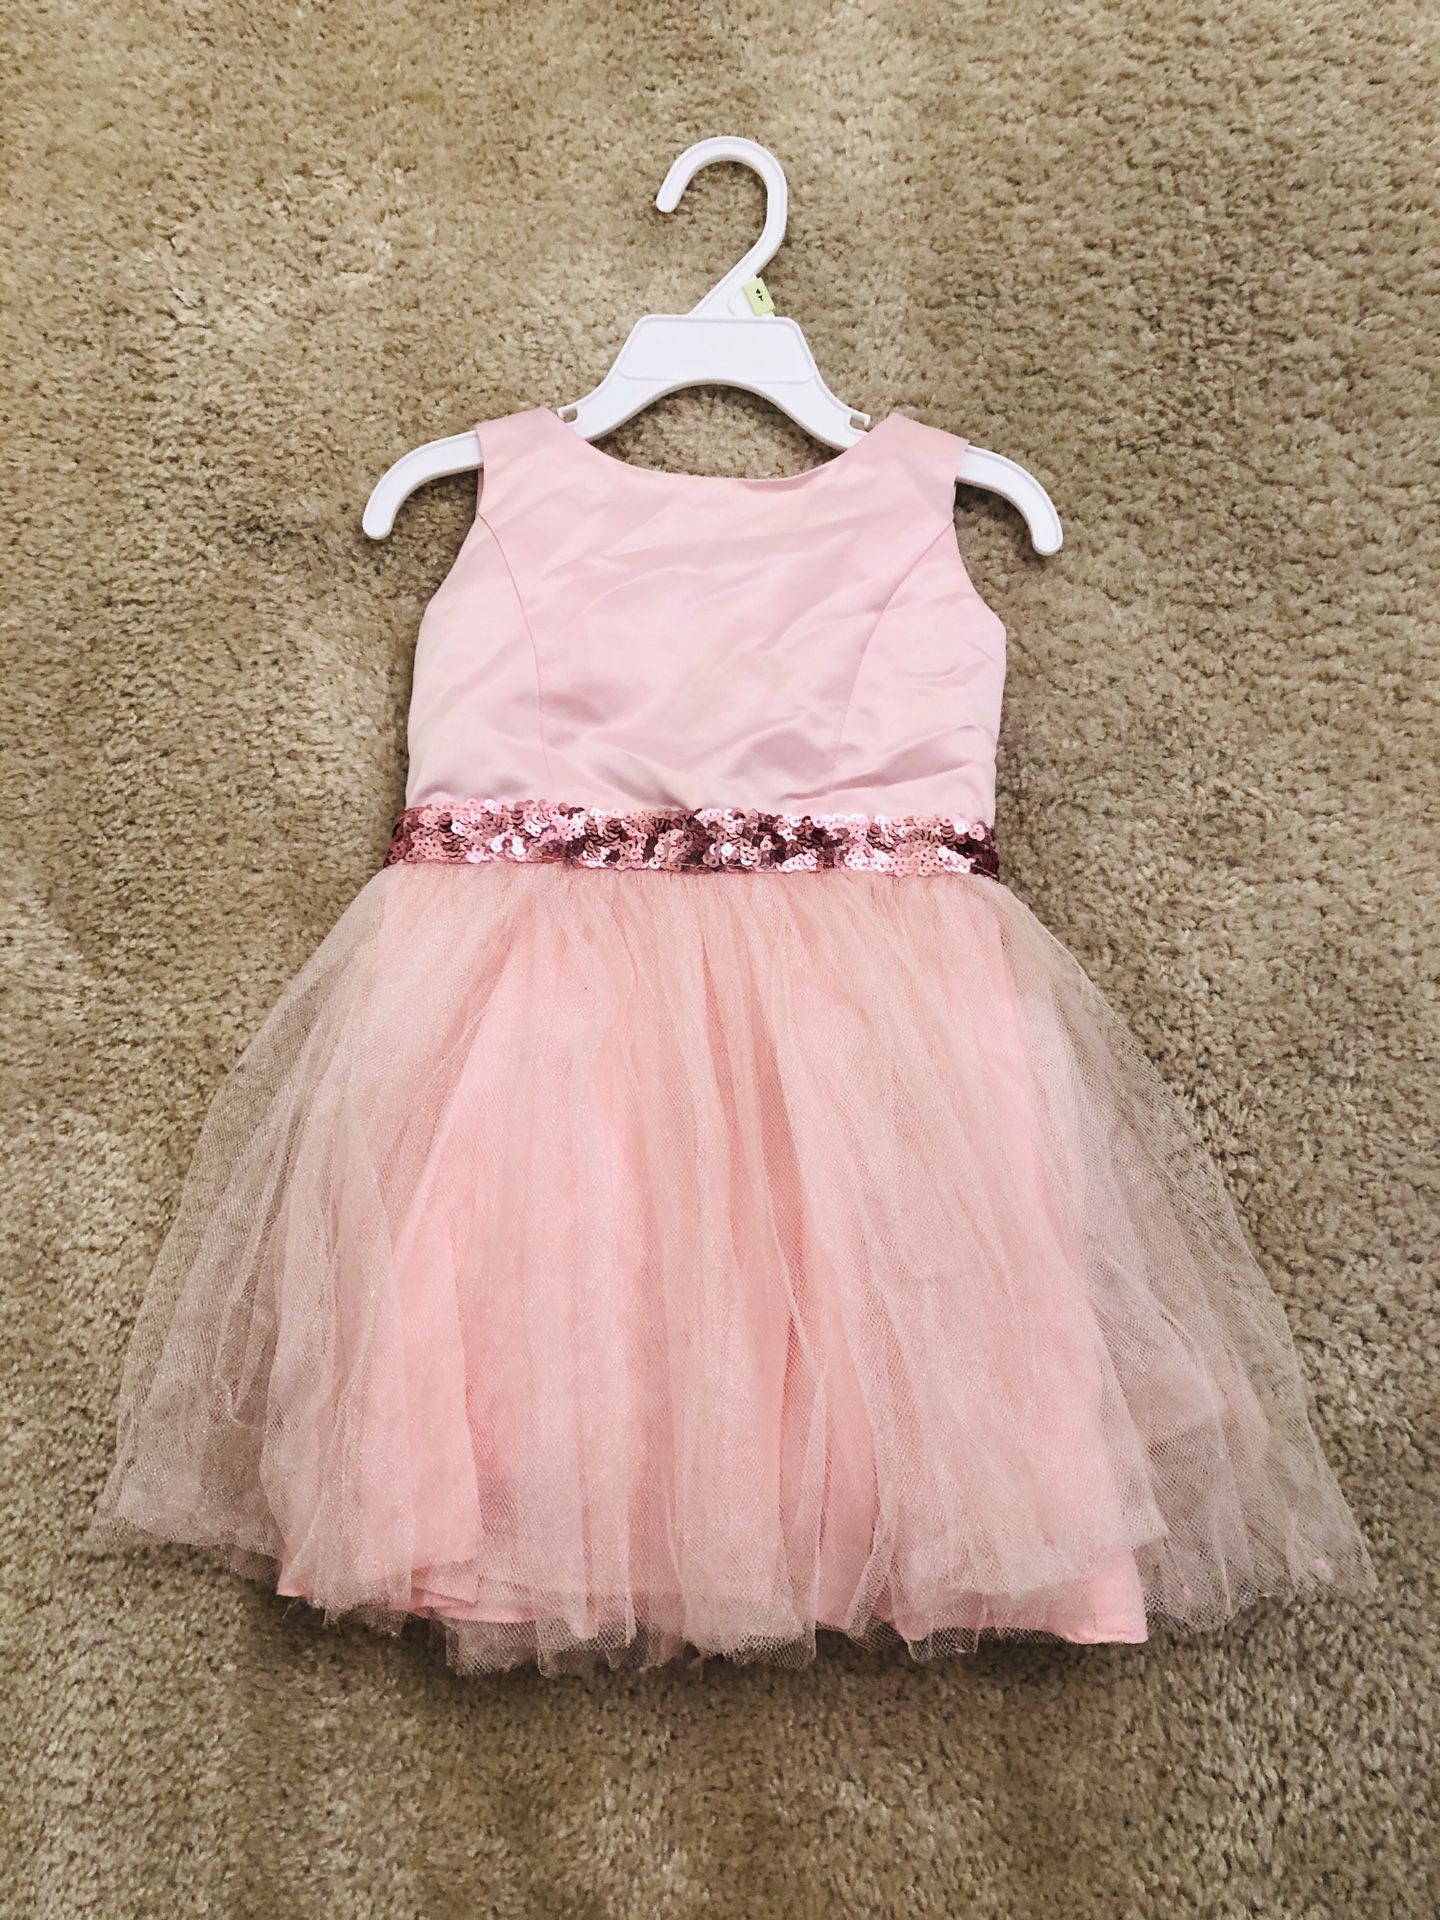 Little princess dress, size 2-3T